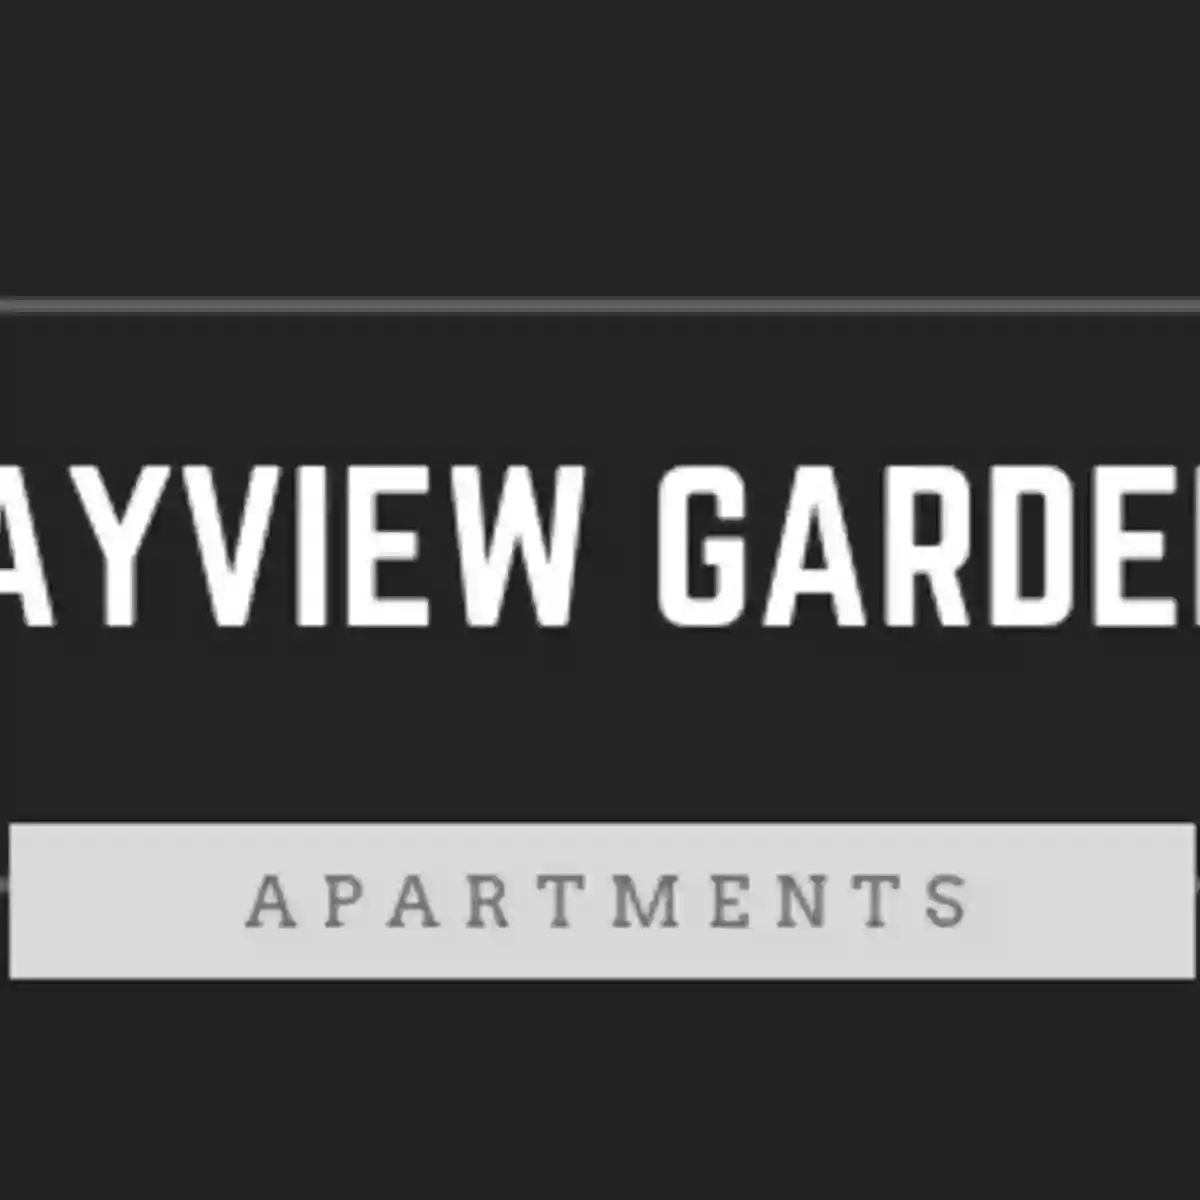 Bayview Gardens